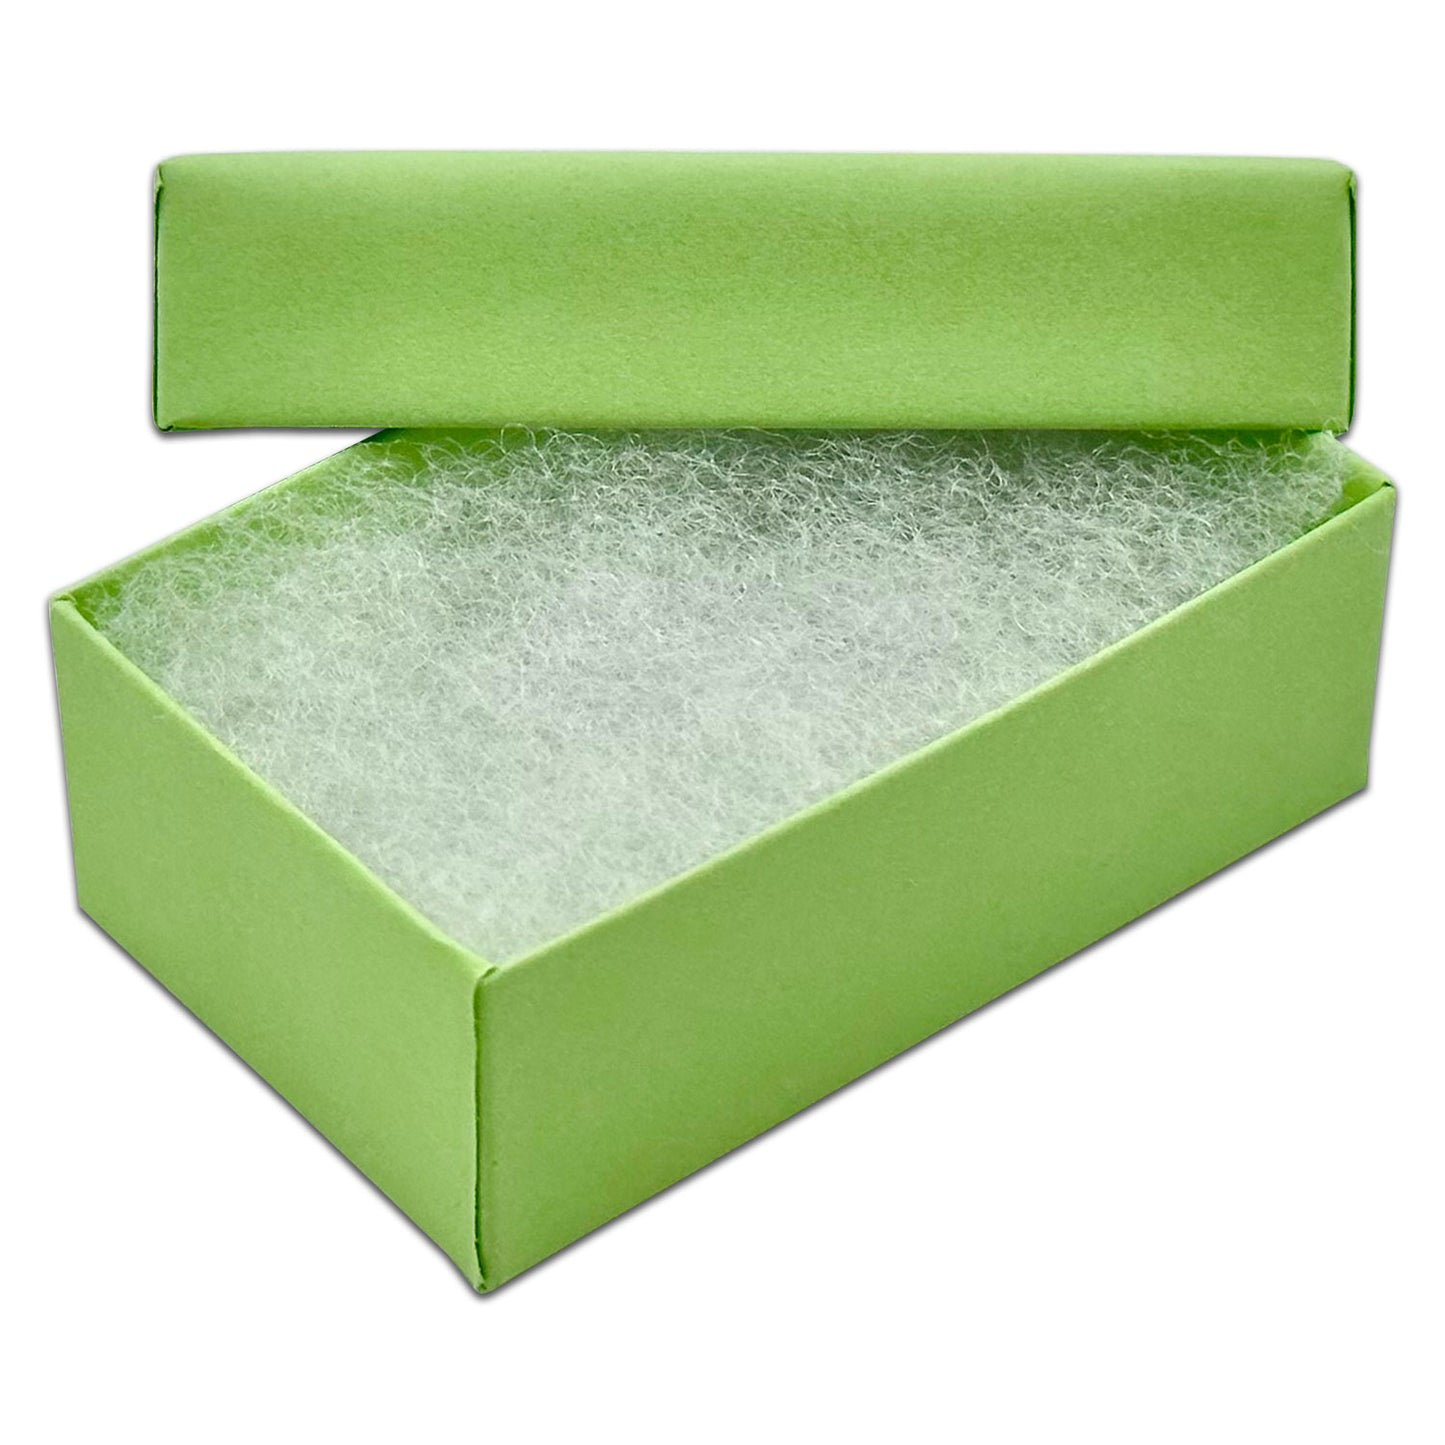 2 5/8" x 1 5/8" x 1" Mint Green Cotton Filled Paper Box (25-Pack)